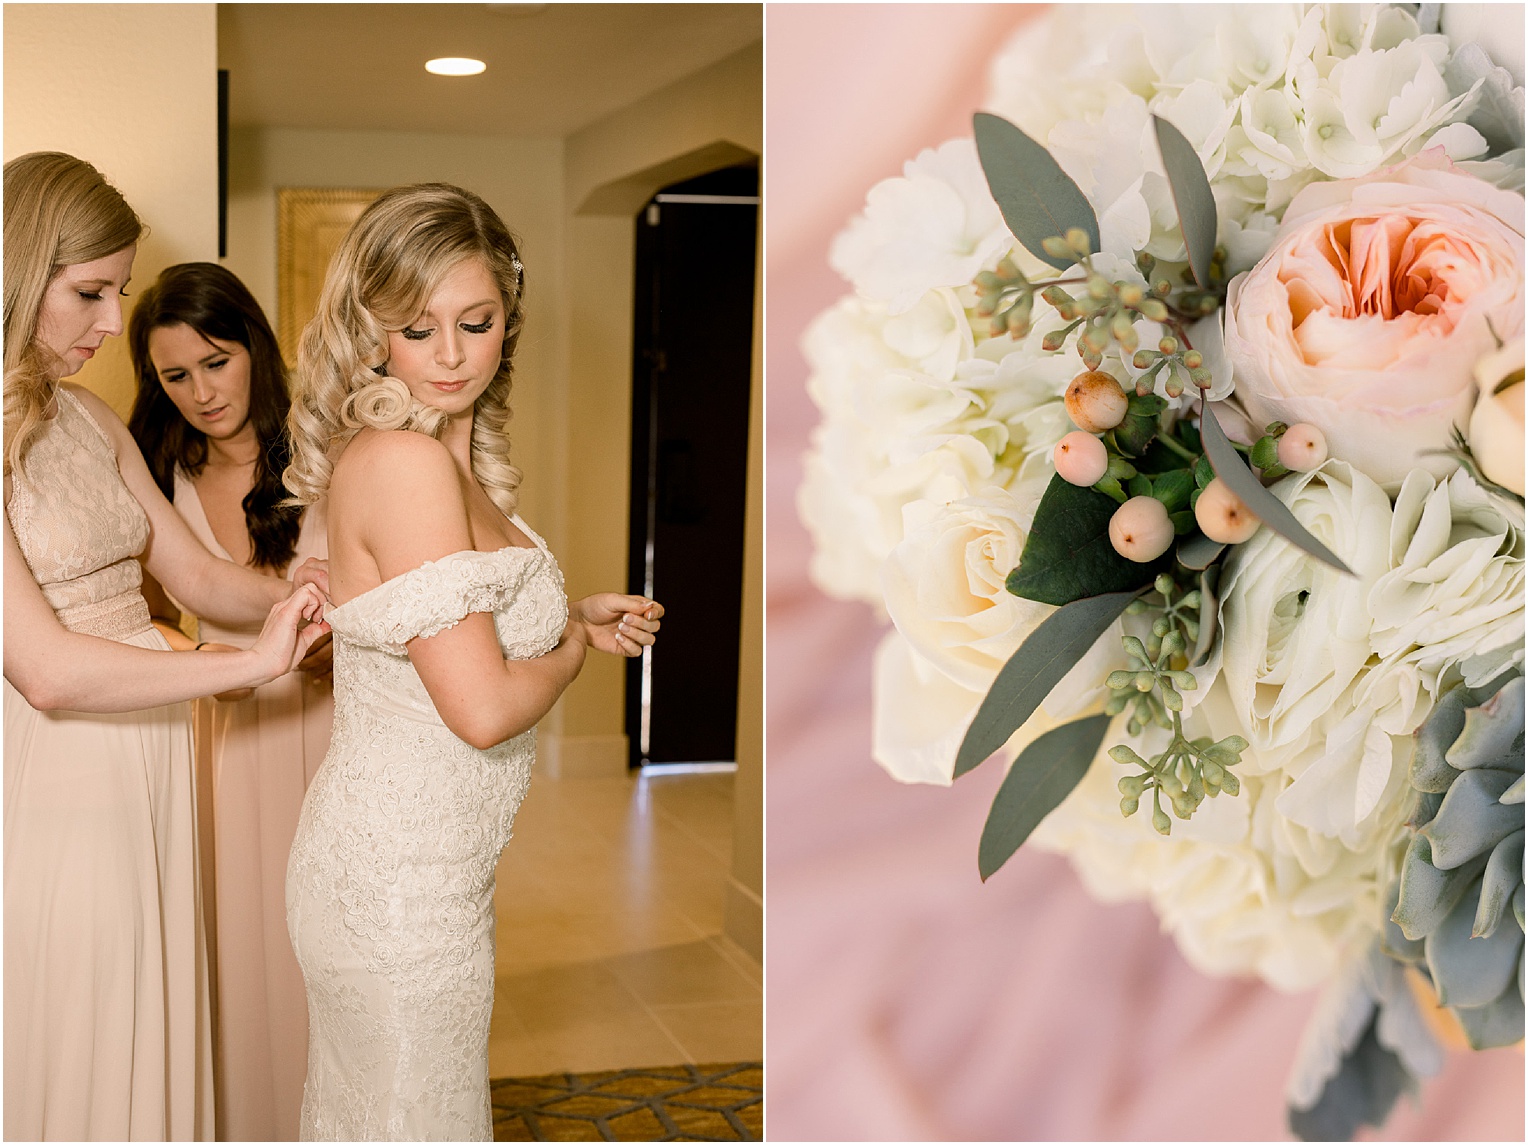 Annabelle + James Hilton El Conquistador Wedding blush wedding details and bridal gown